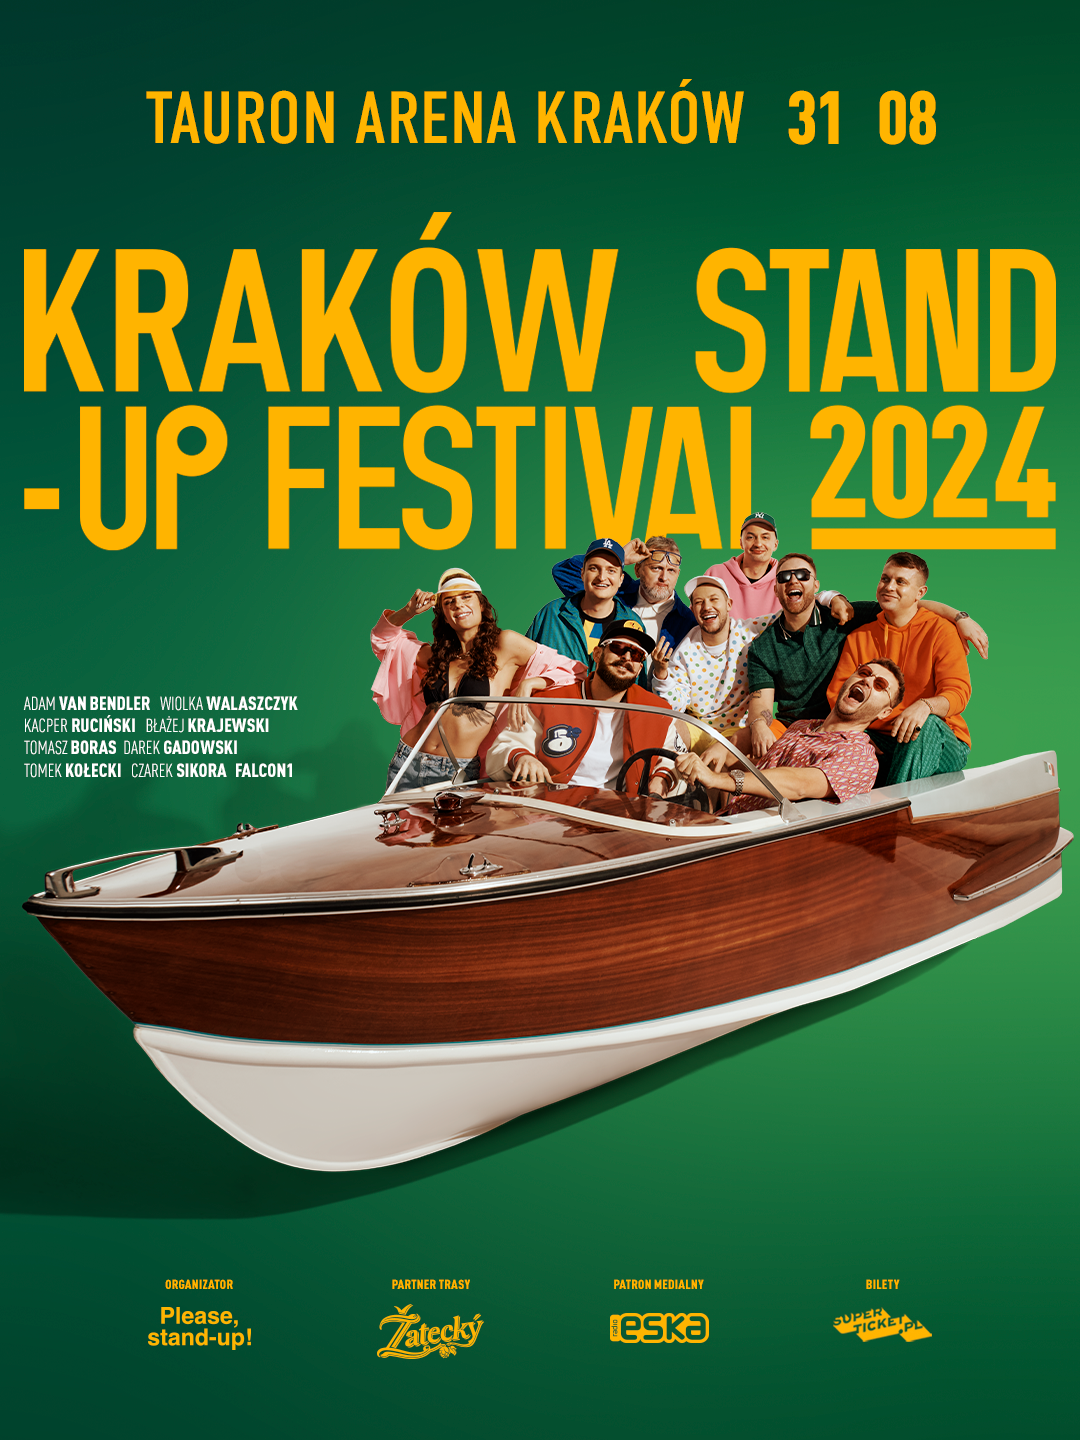 Kraków Stand-up Festival™ 2024 